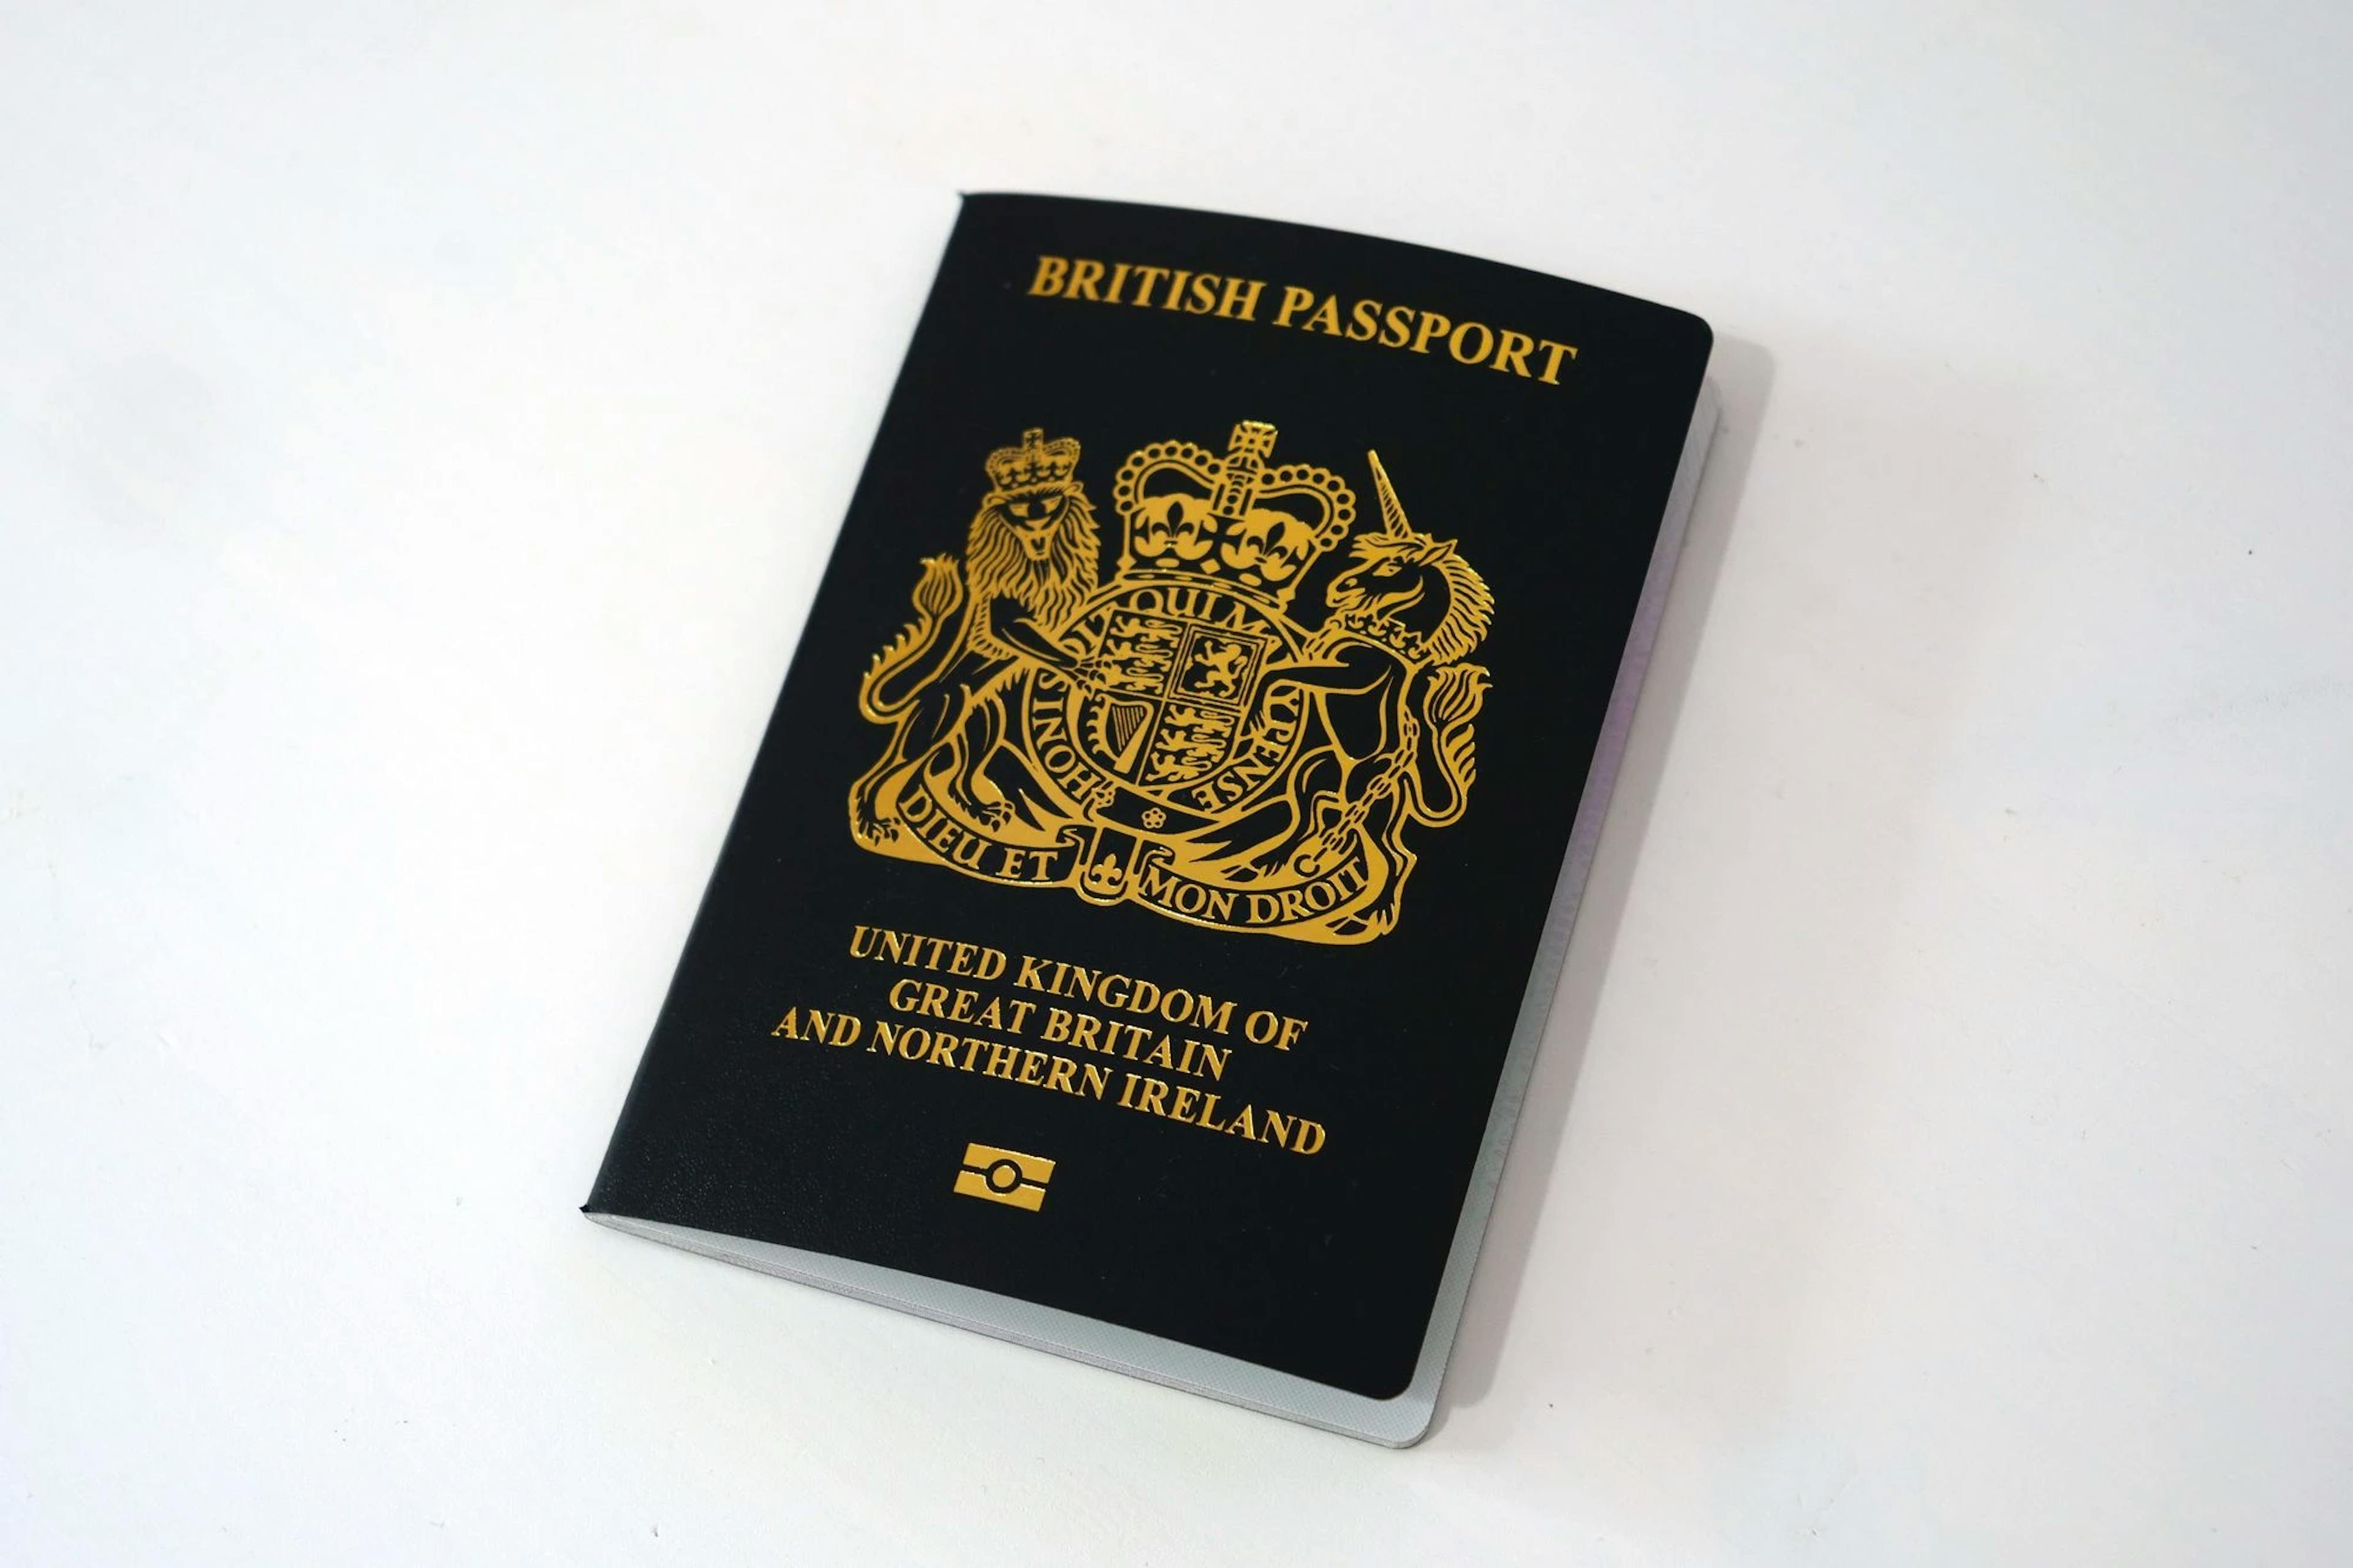 A photo of a British passport